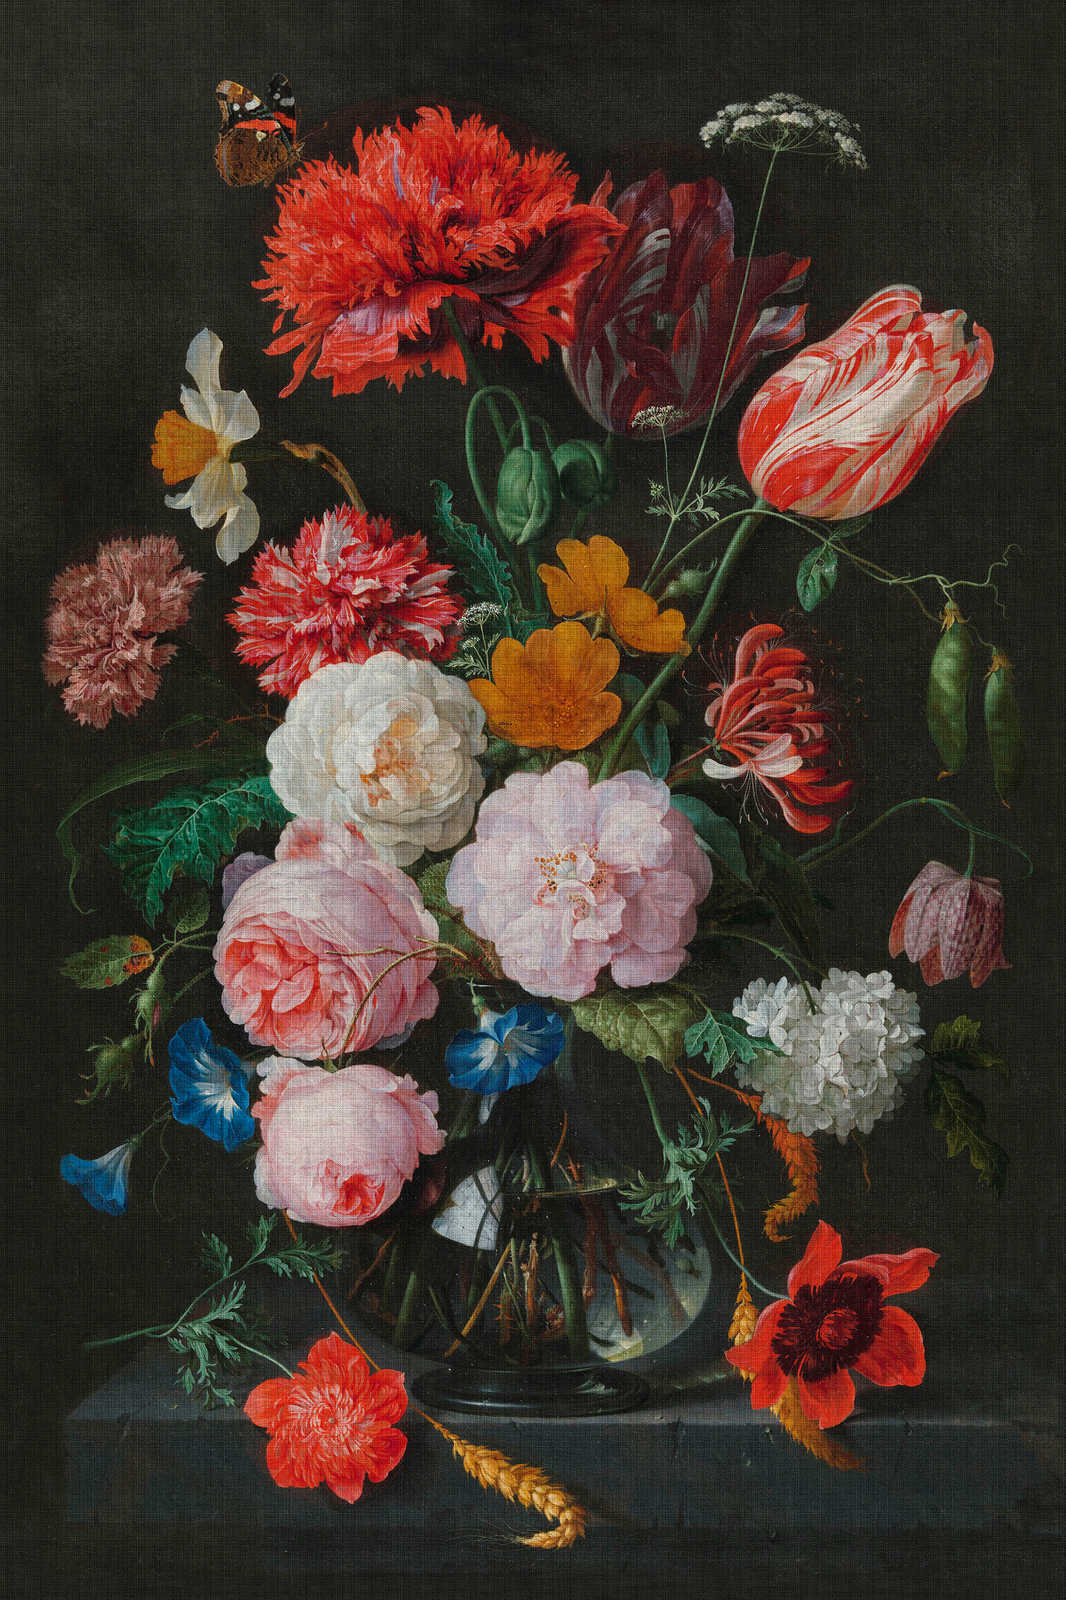             Artists Studio 4 - Quadro su tela Flowers Still Life with Roses - 0,80 m x 1,20 m
        